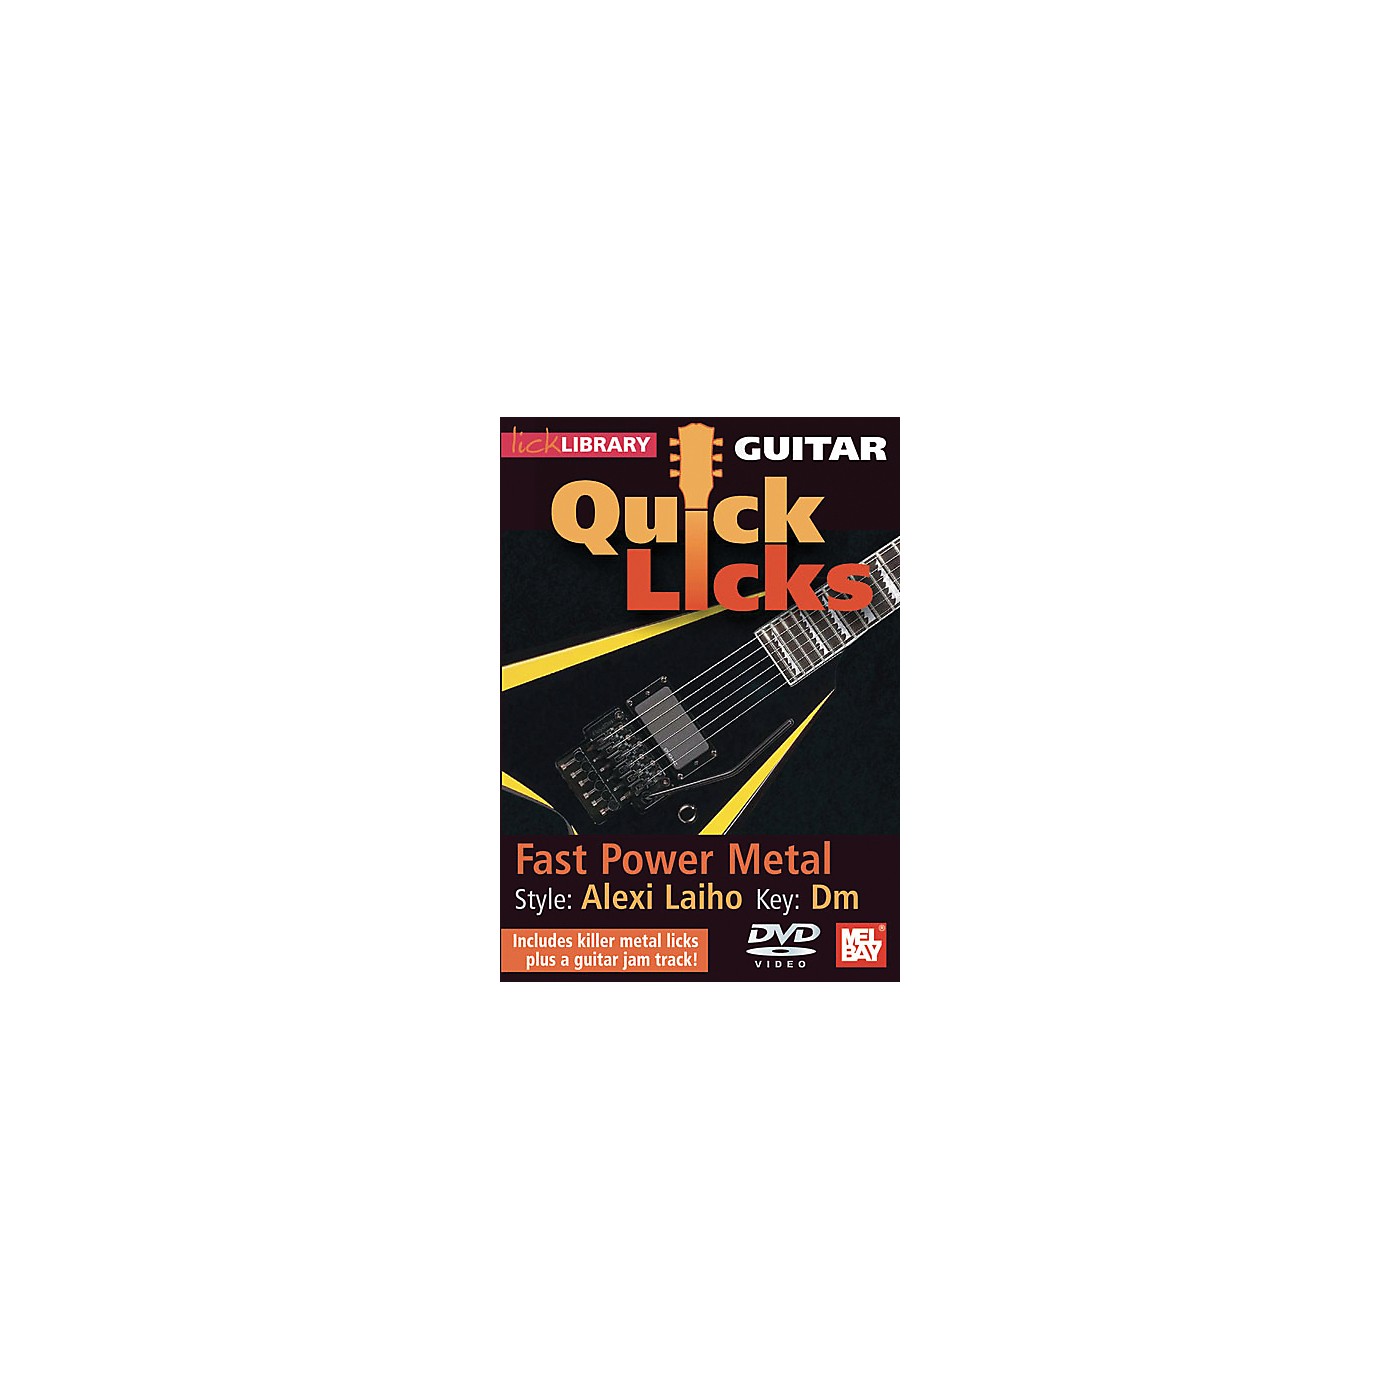 Mel Bay Lick Library Guitar Quick Licks - Alexi Laiho Style: Fast Power Metal DVD thumbnail